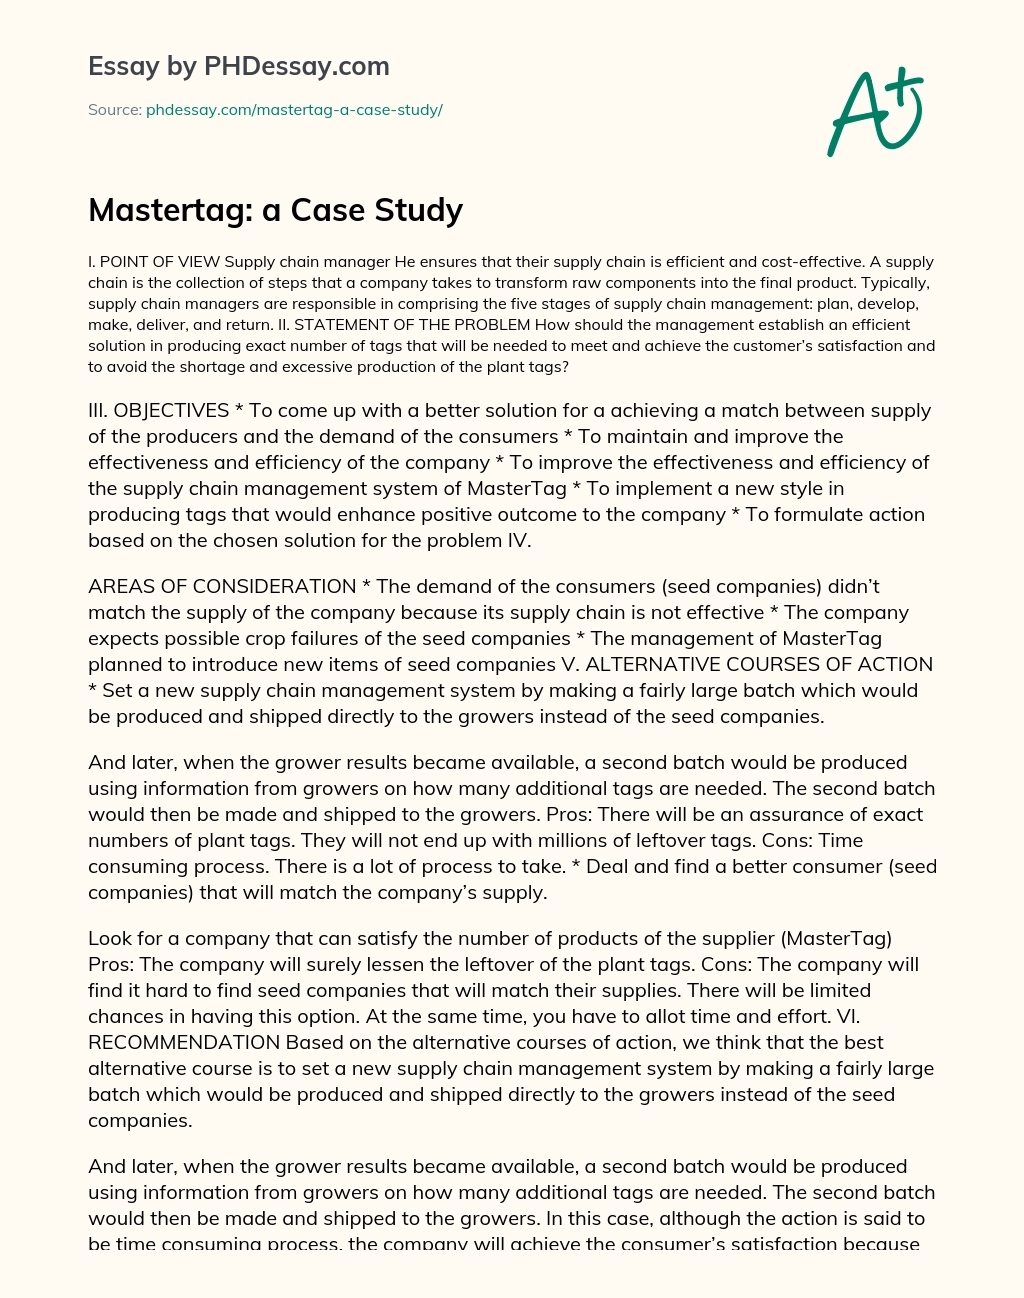 Mastertag: a Case Study essay